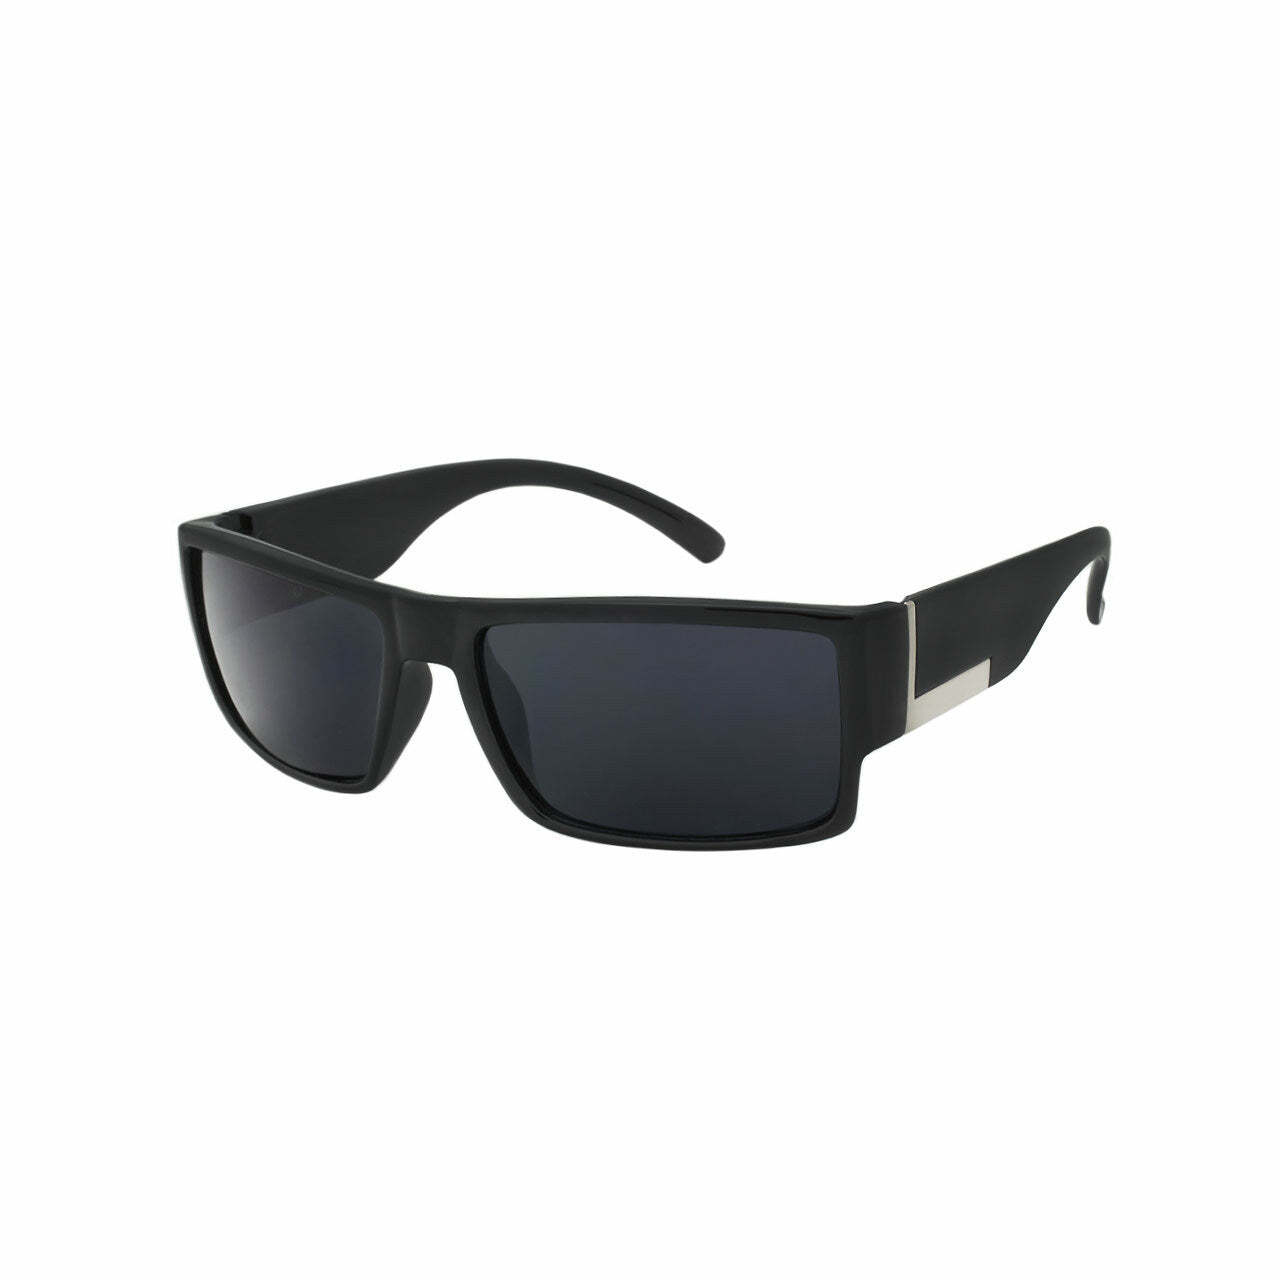 Polycarbonate UV400 Square Sport Sunglasses Men  (Pack of Dozen)